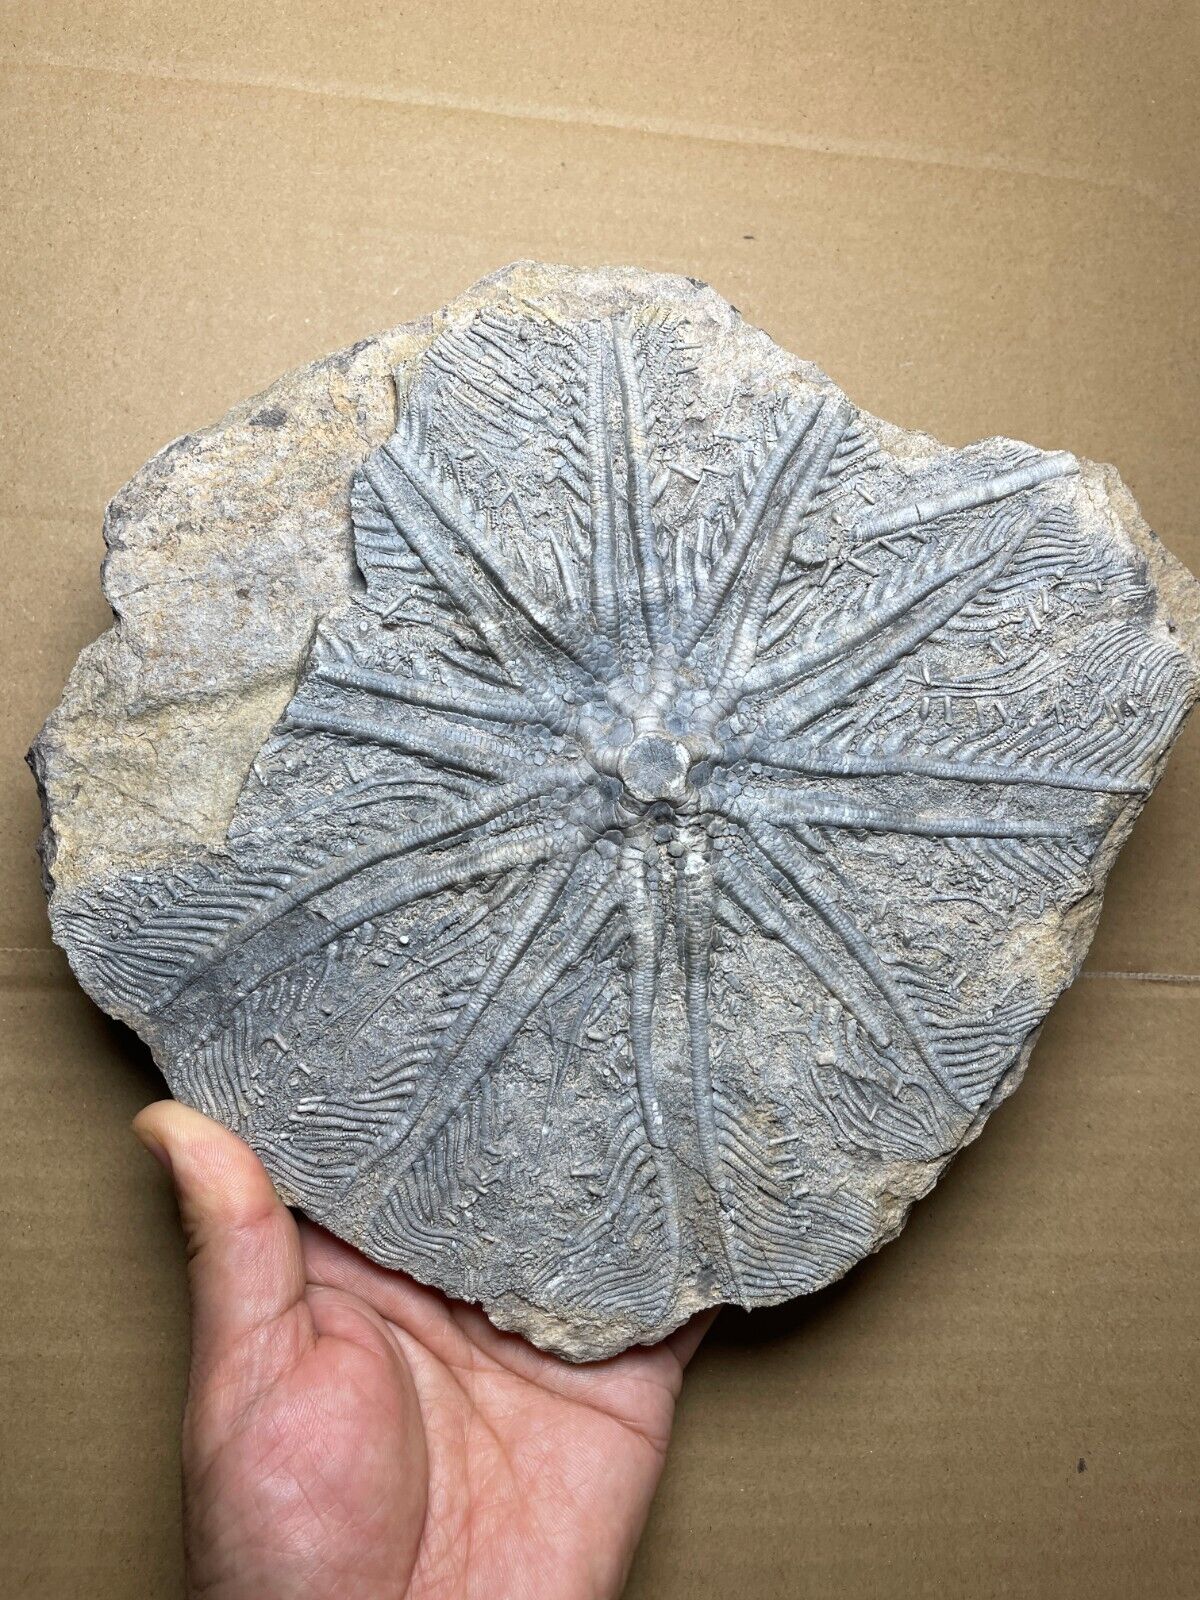 1200g Huge Triassic Natural crinoid specimen Geologic rock